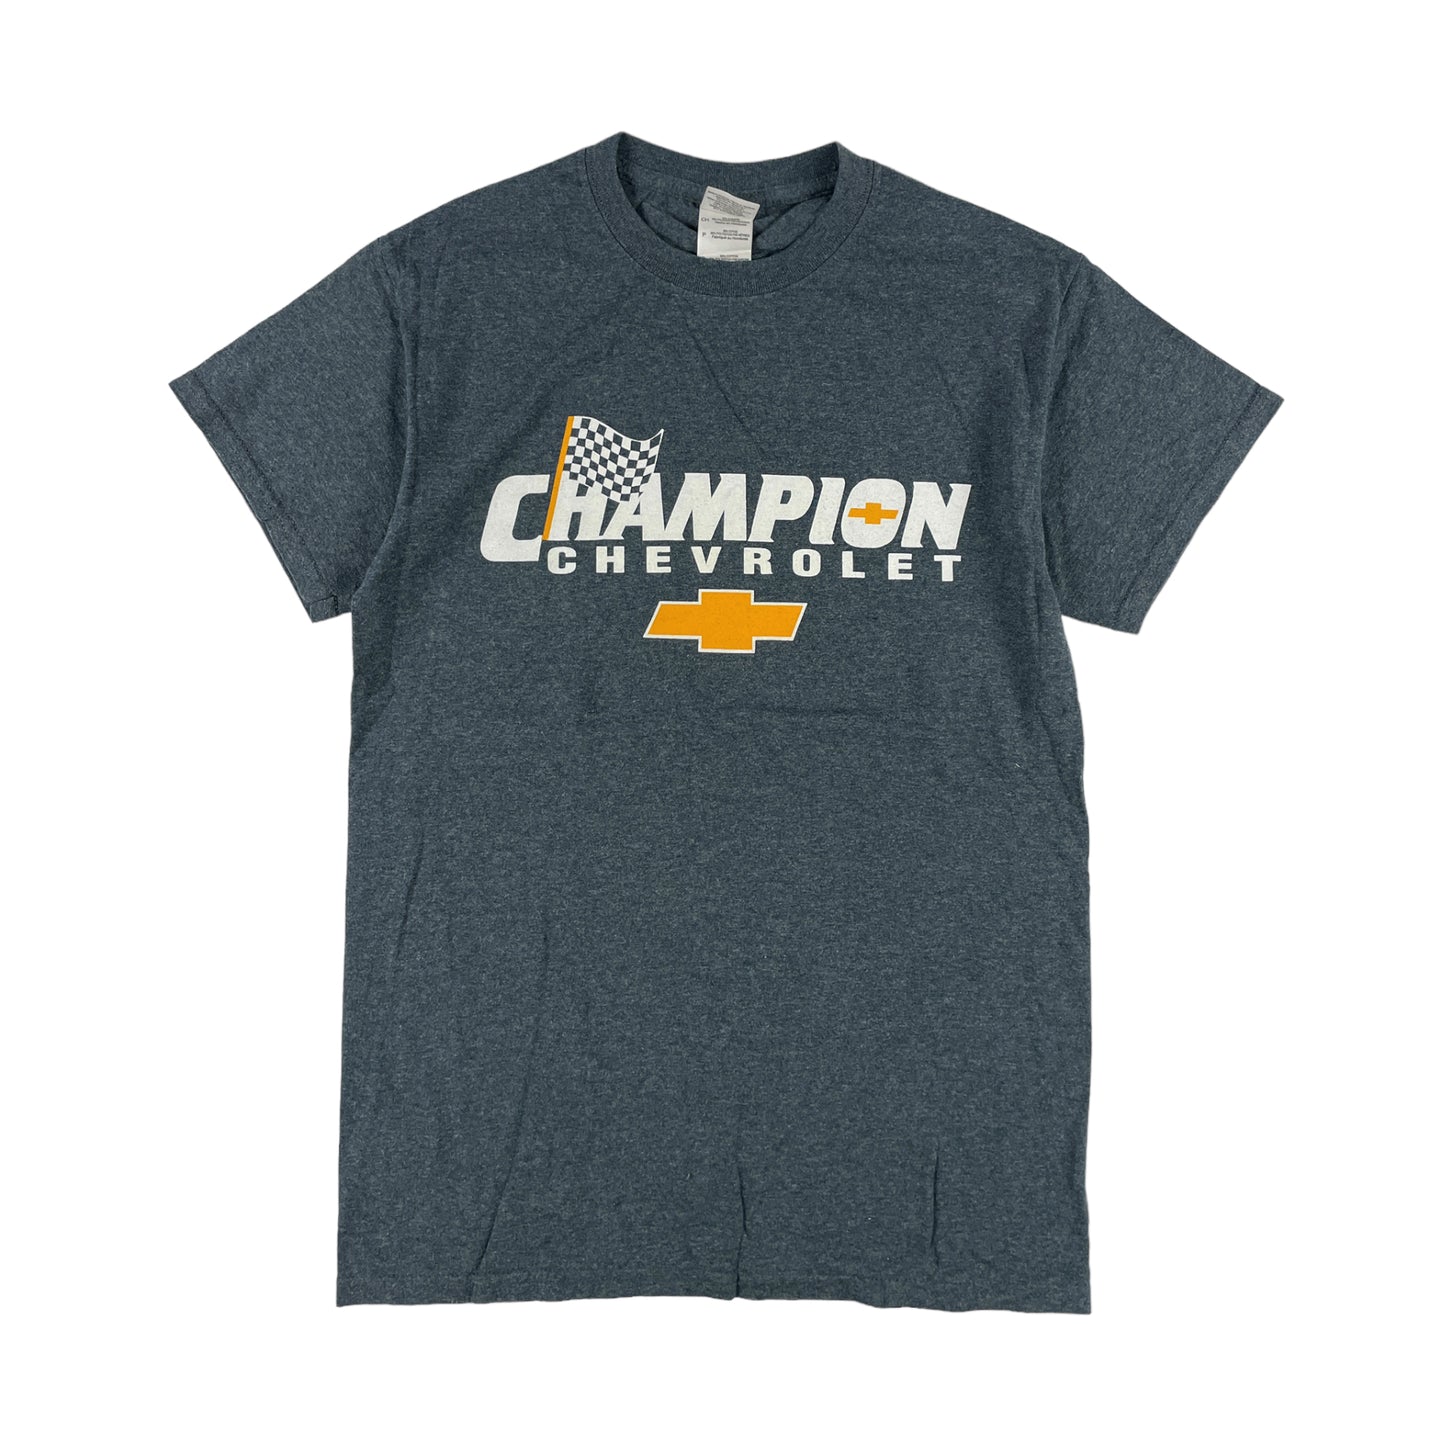 Champion Chevrolet T-Shirt